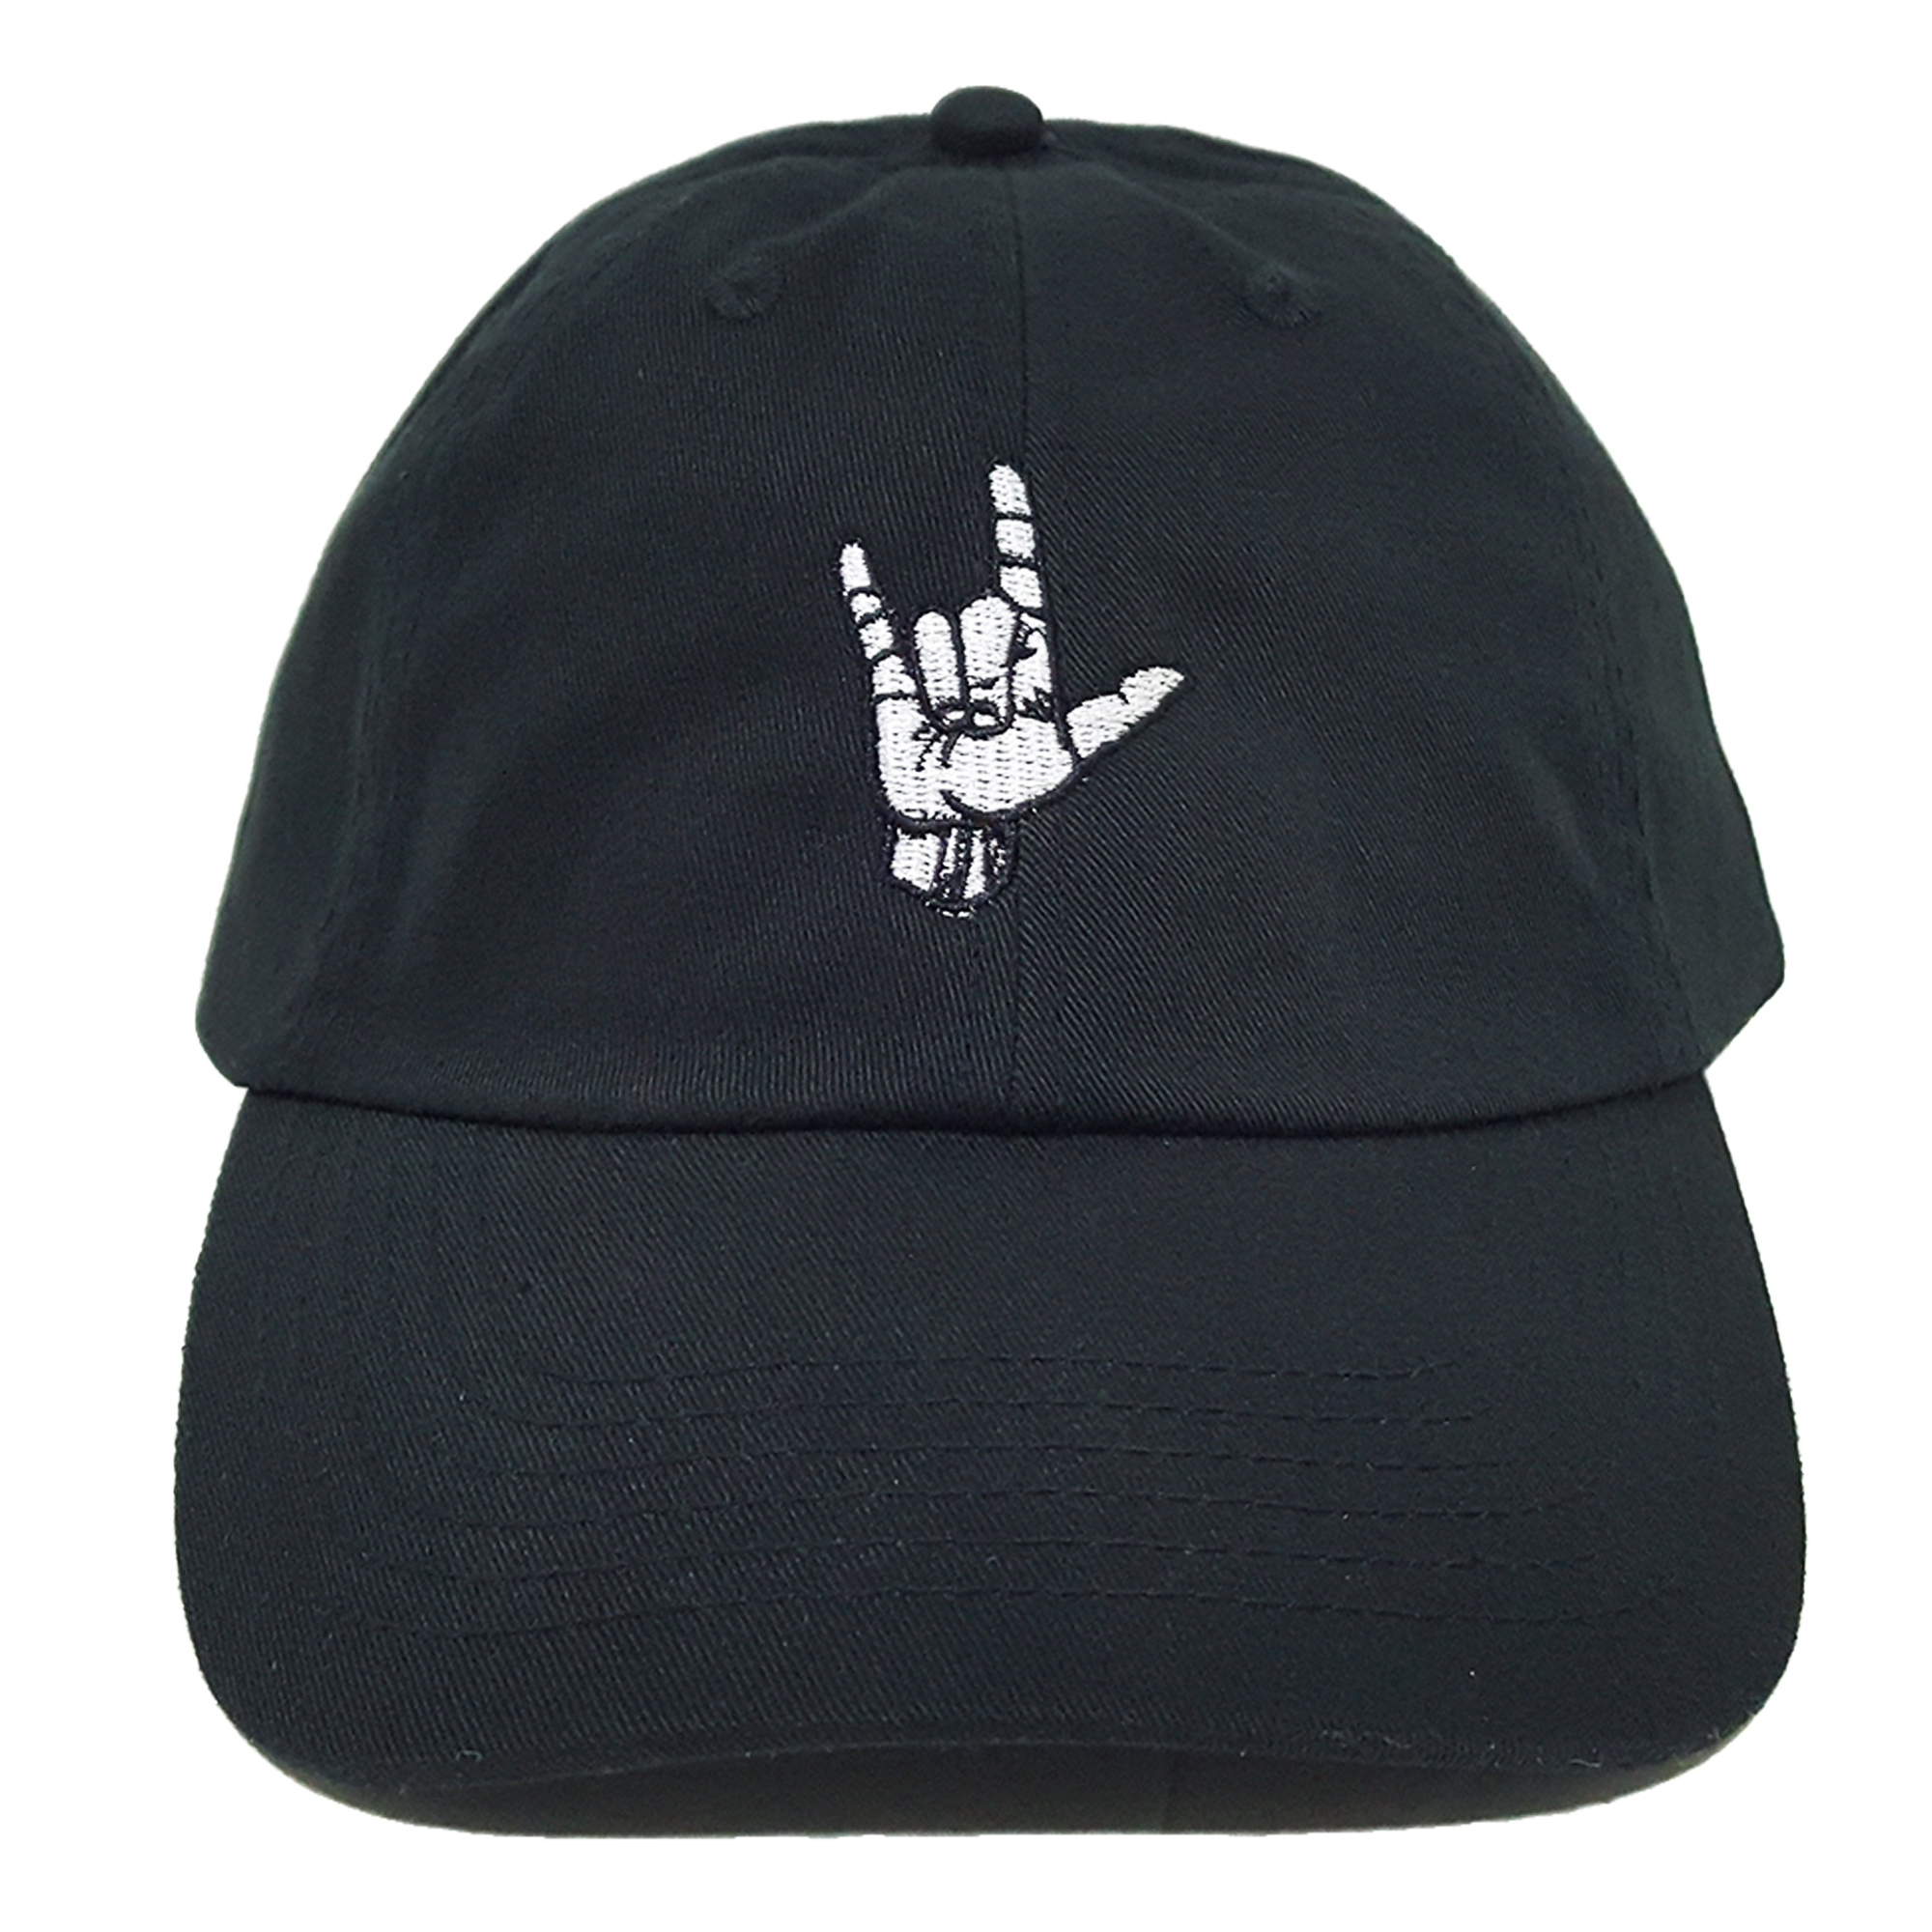 Rock Hand hat — Hats 4u USA